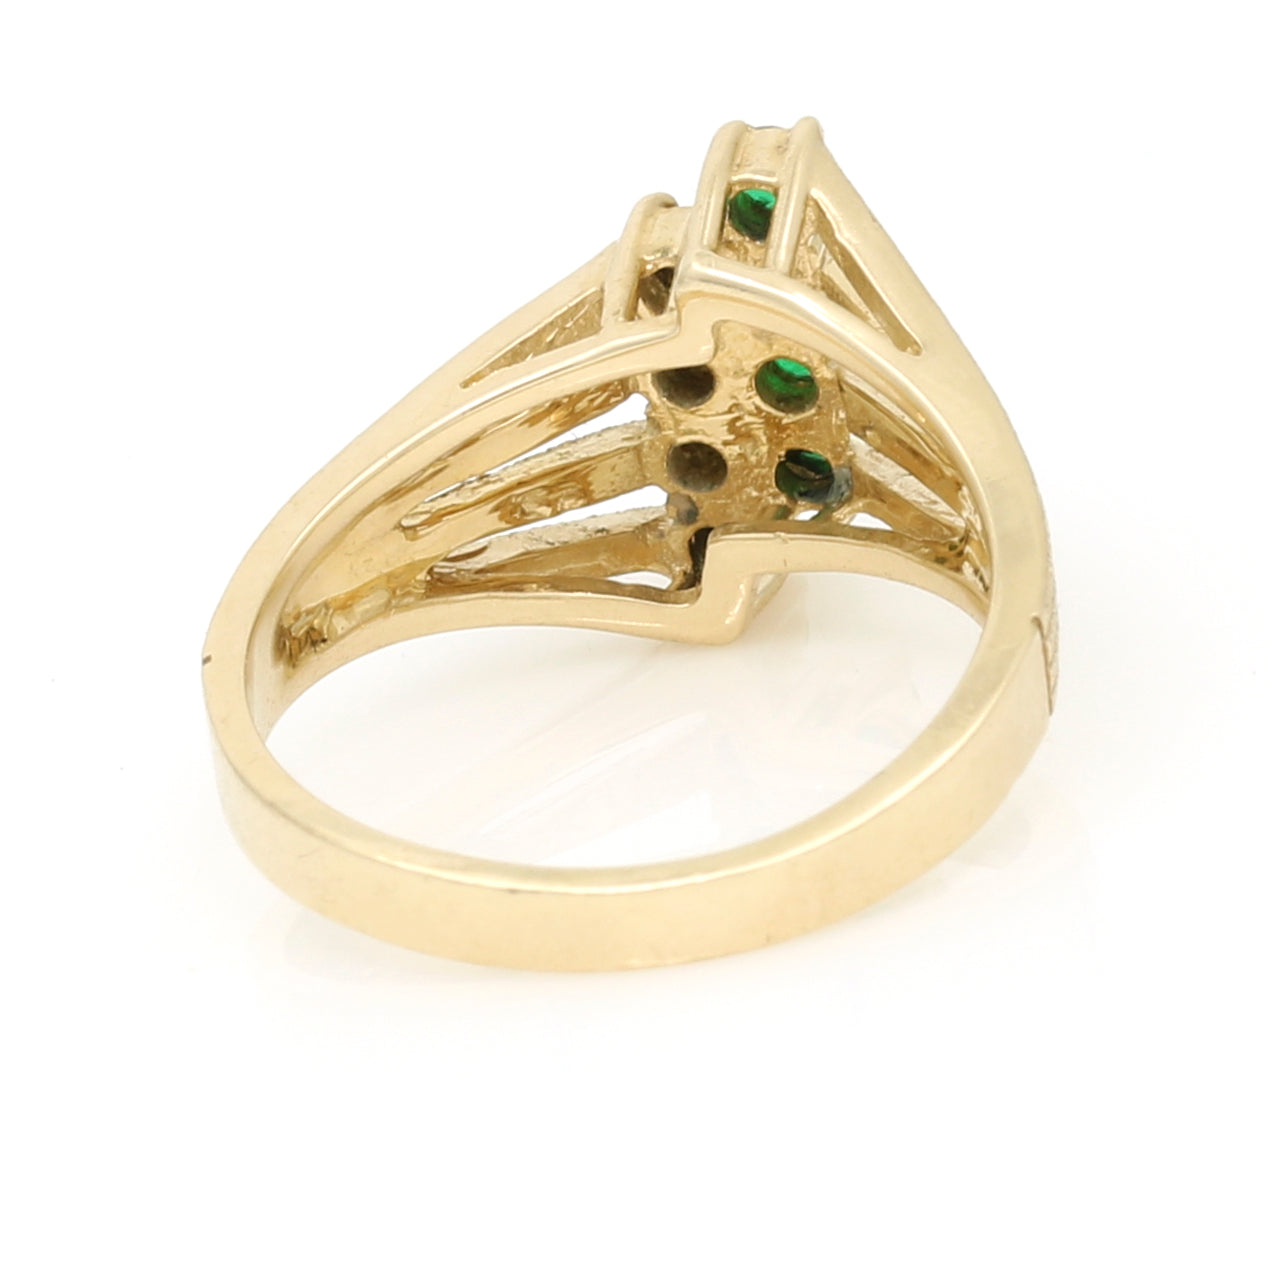 Gemporia Retro Emeralds & Diamonds Statement Ring - 14k Yellow Gold | Size 6.5